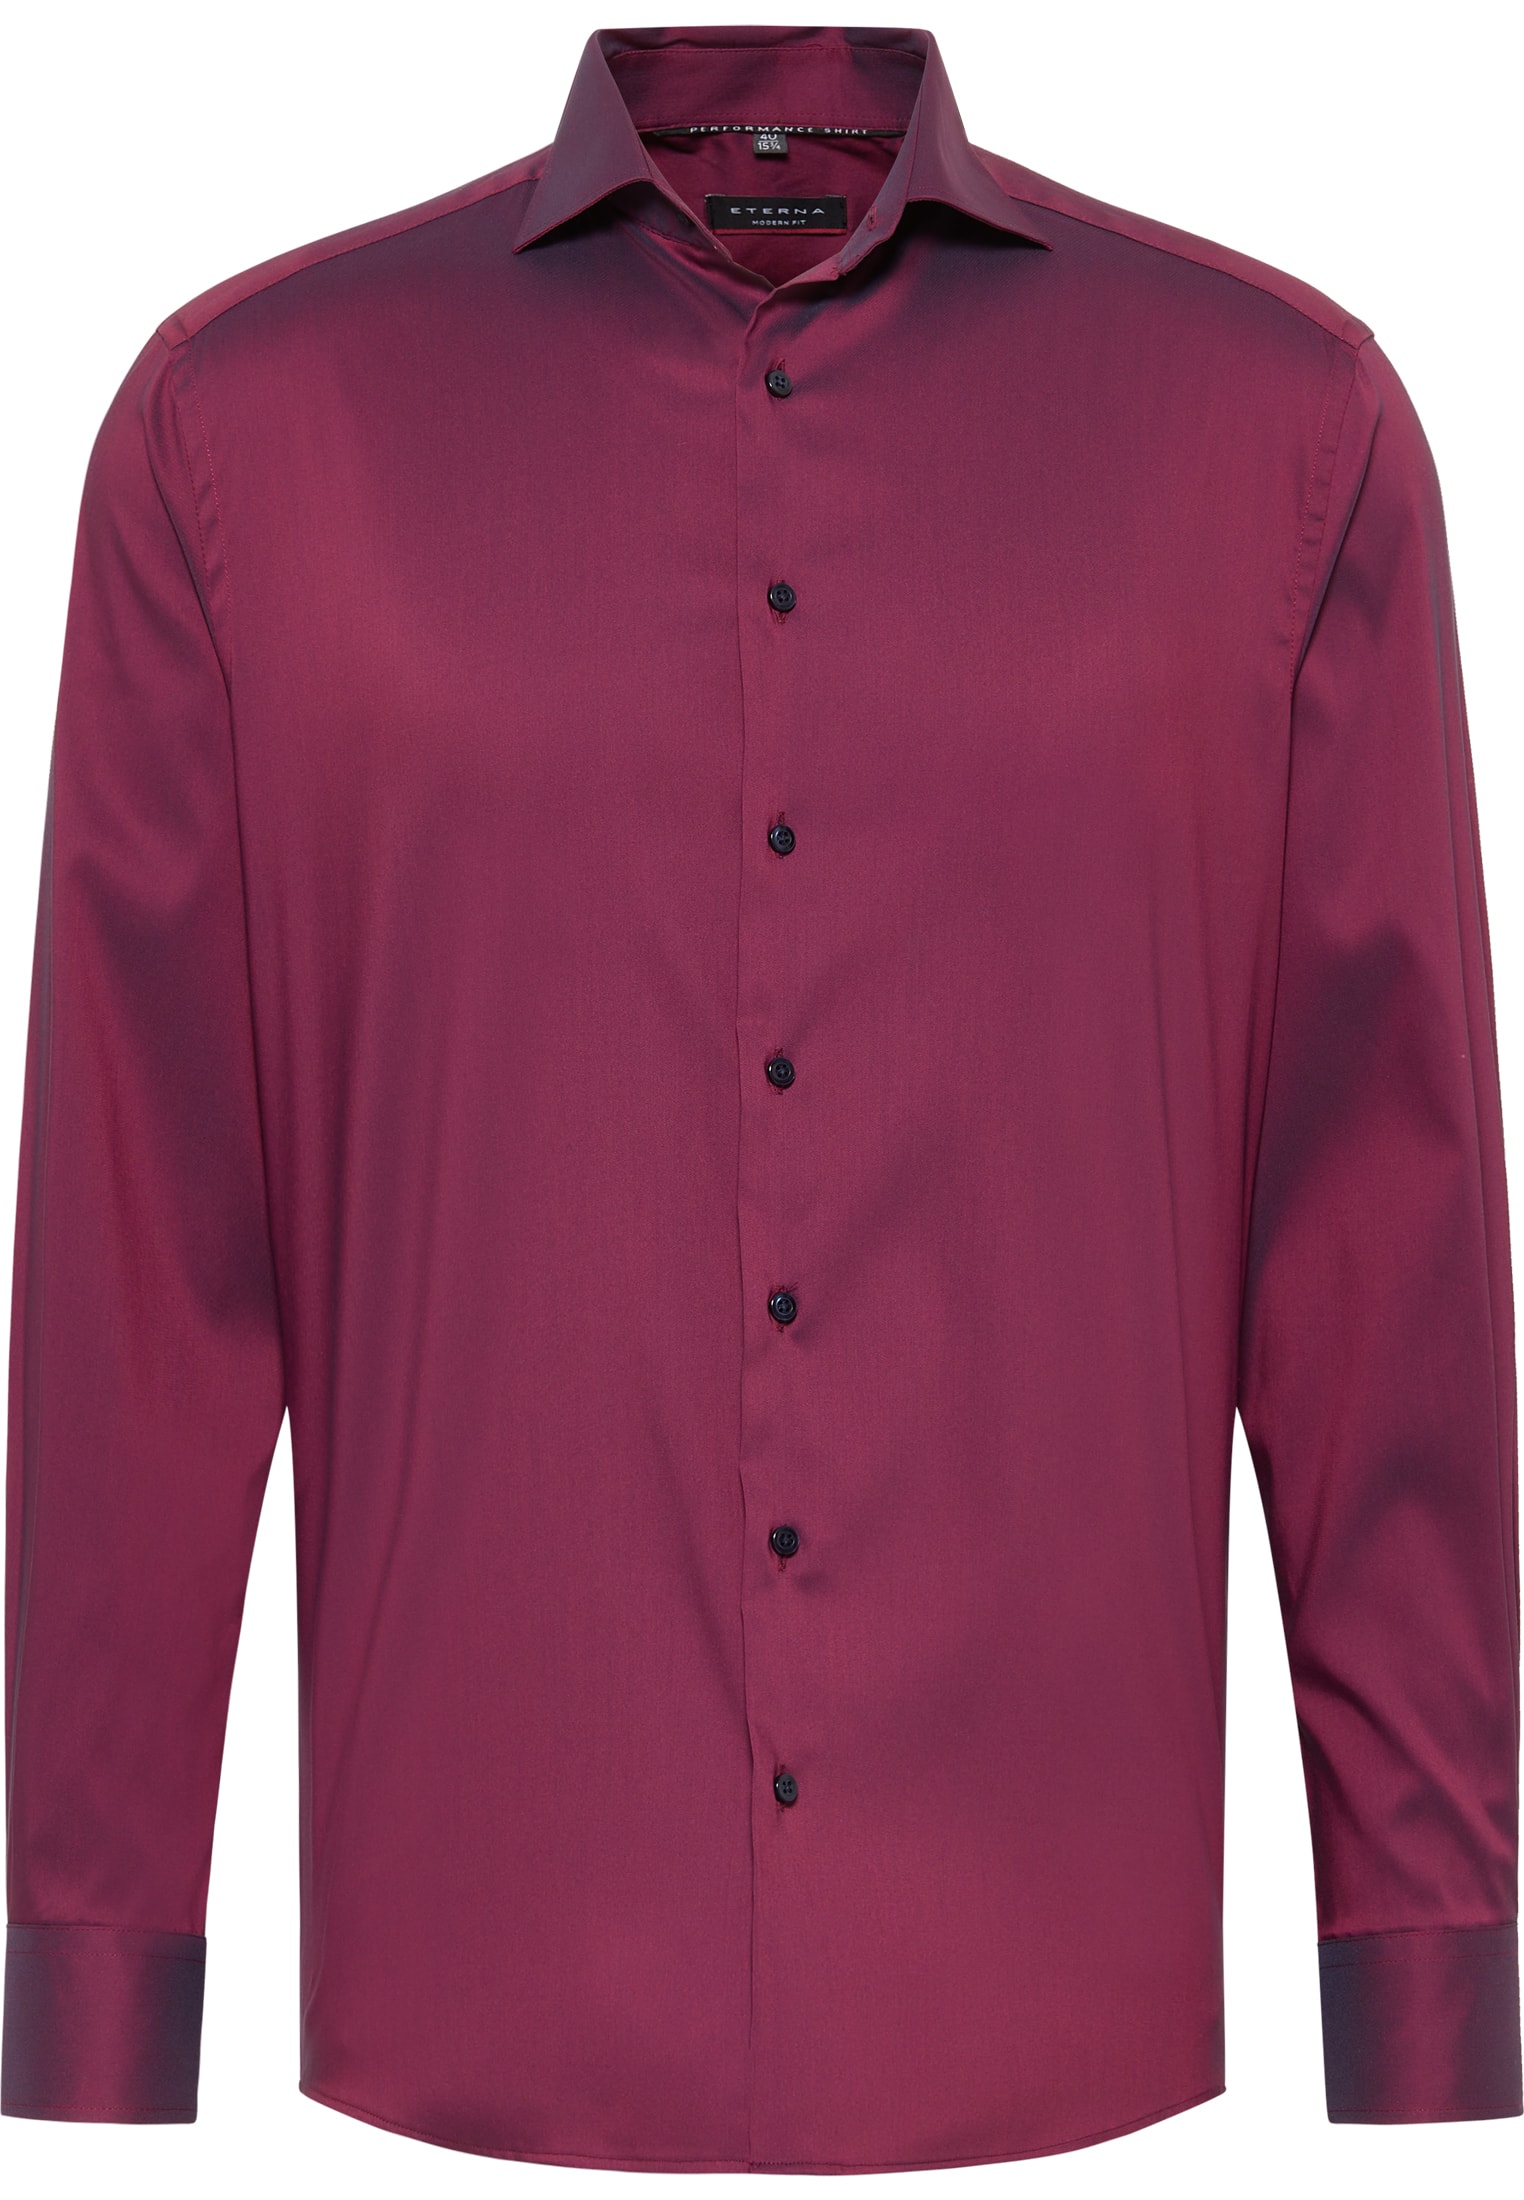 MODERN FIT Performance Shirt in burgunder unifarben | burgunder | 48 |  Langarm | 1SH02224-05-81-48-1/1